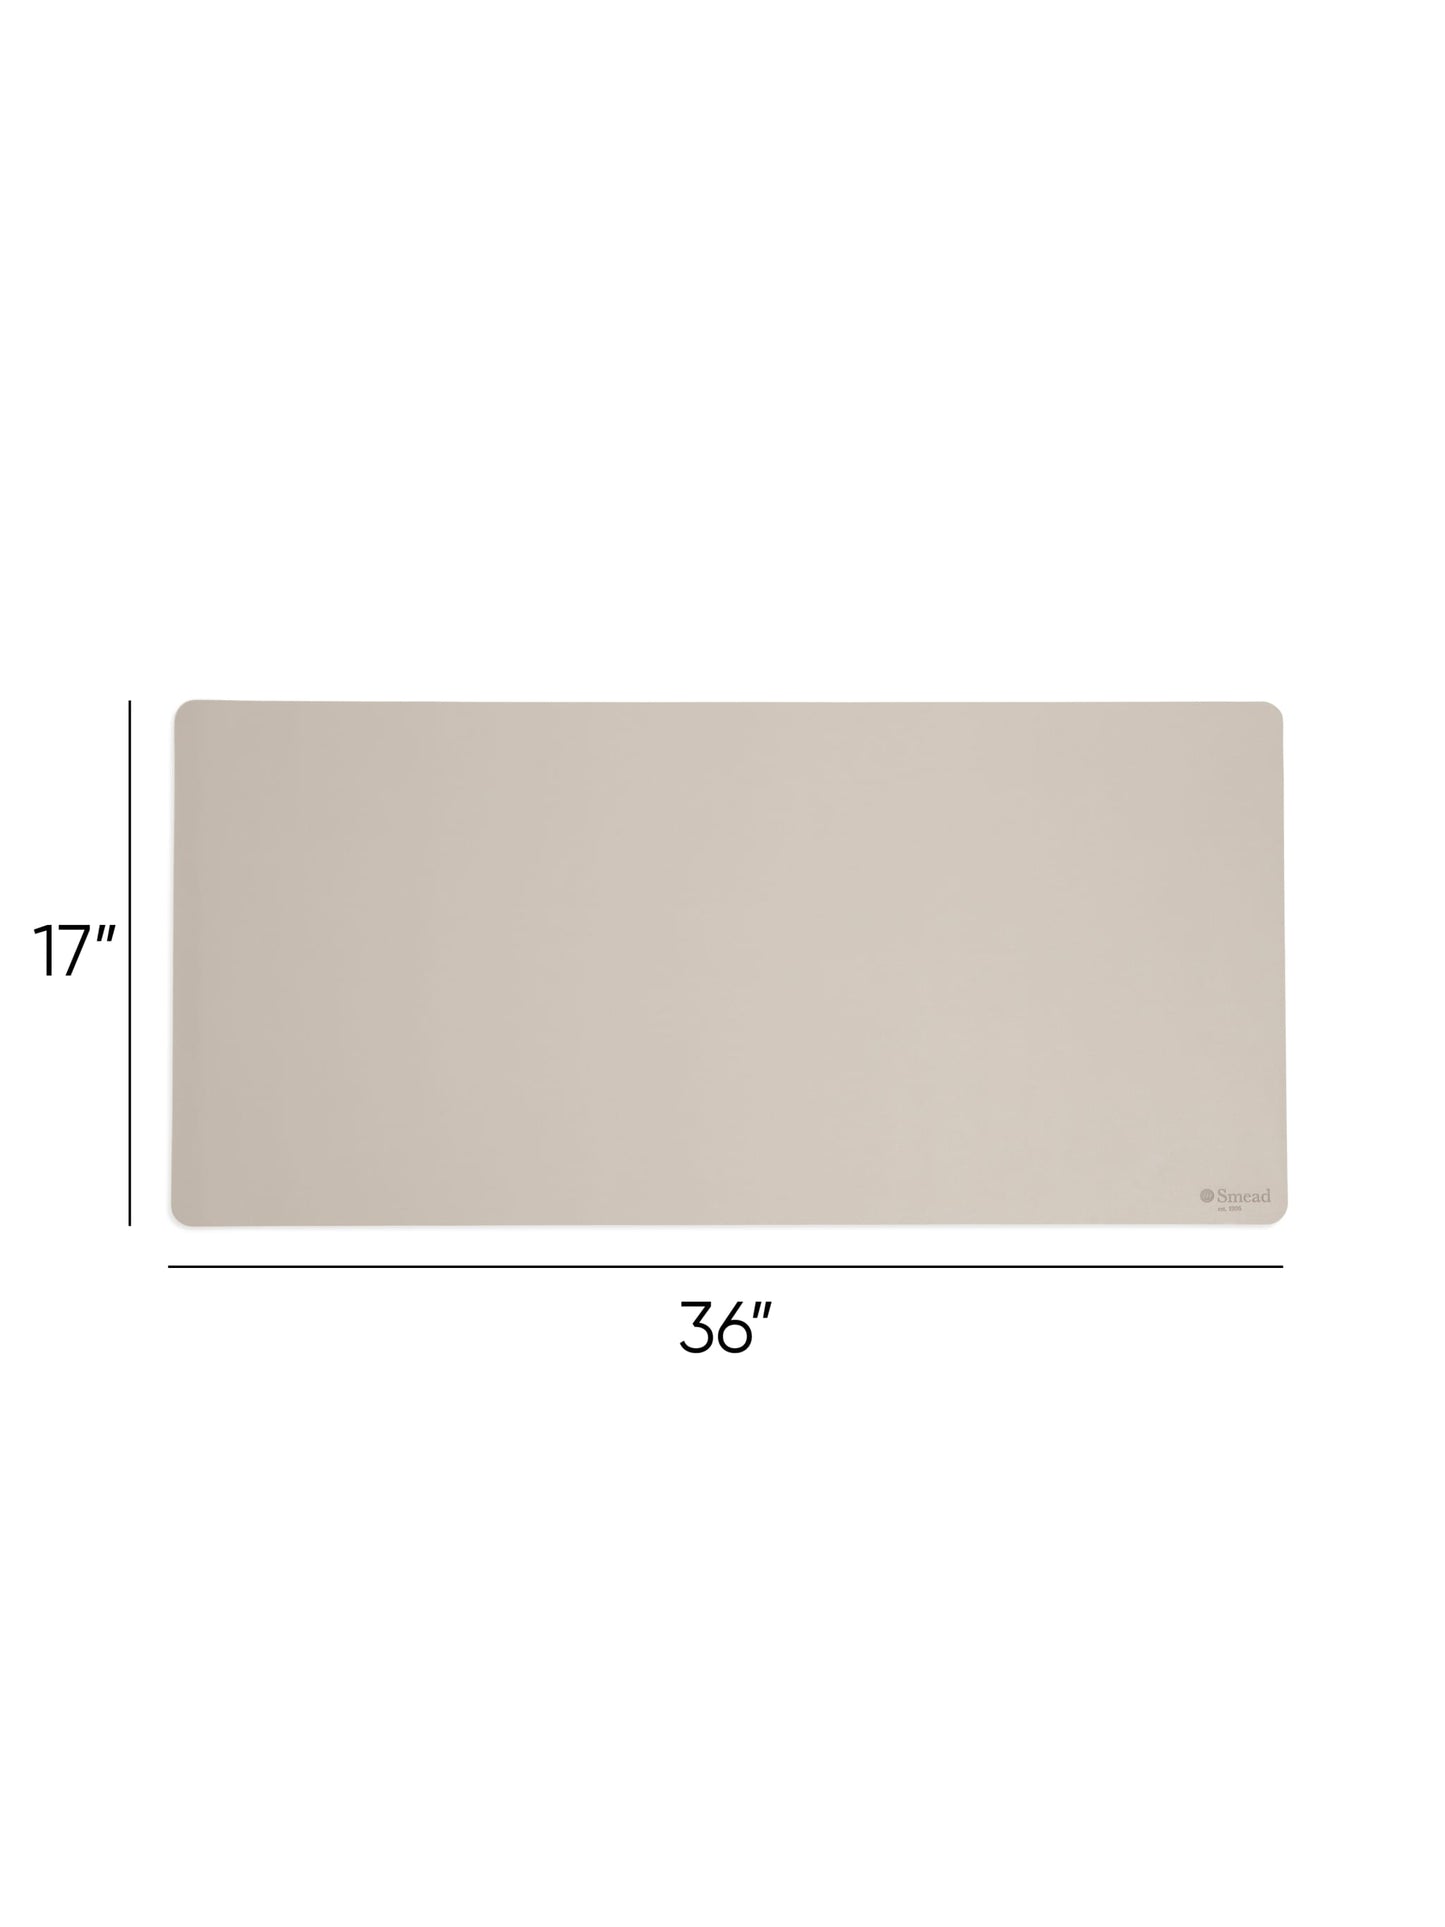 Vegan Leather Desk Pad, Sandstone Color, 36"X17" Size, 086486648264